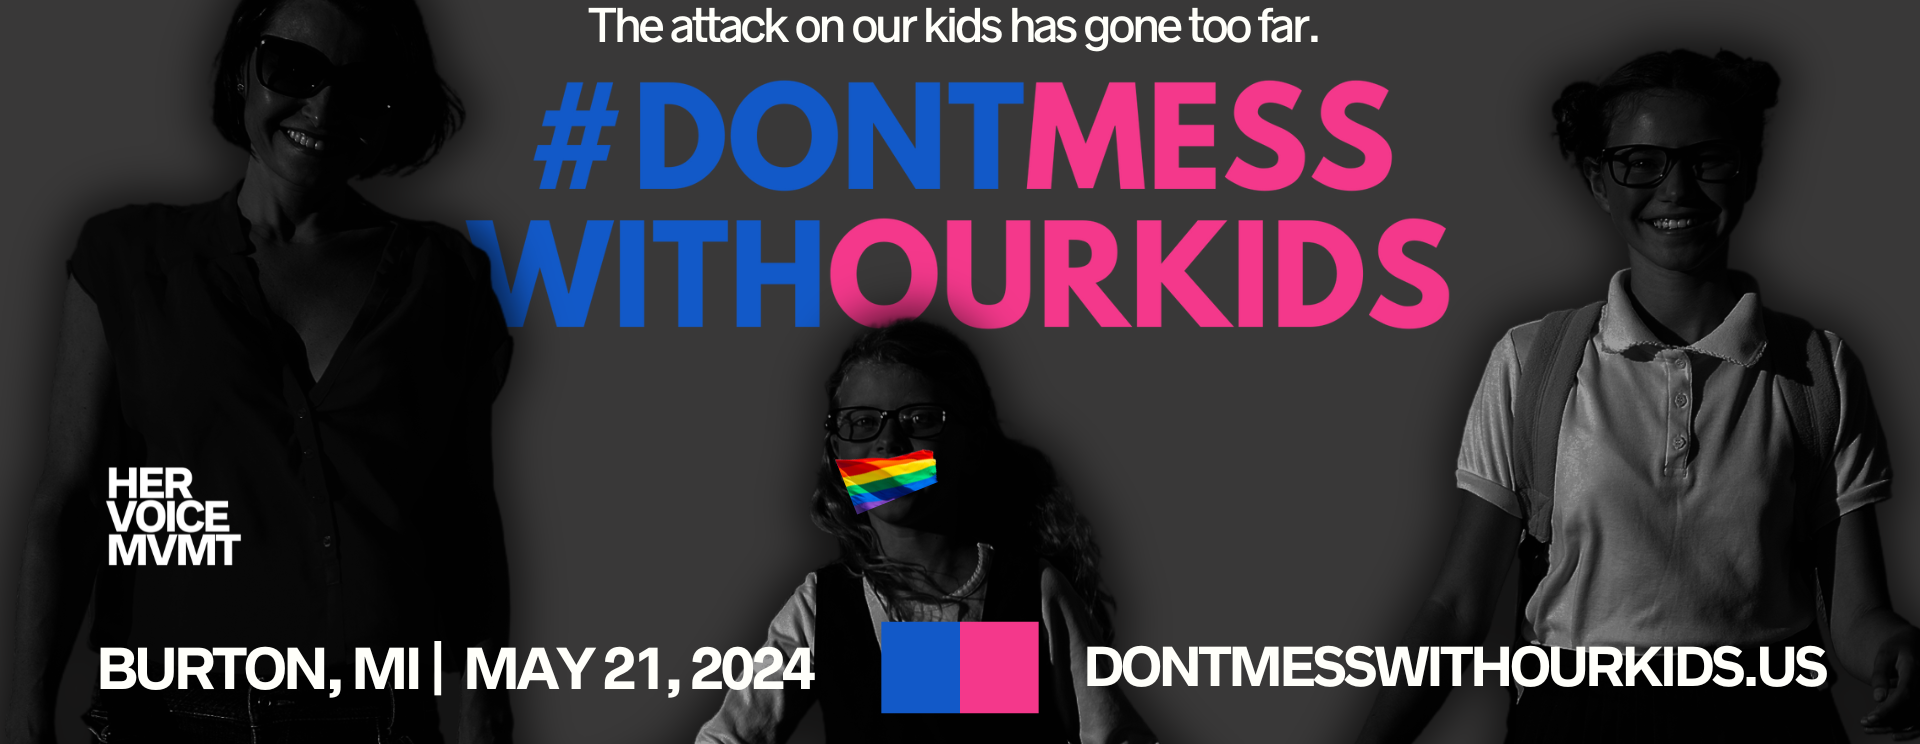 #DontMessWithOurKids Vision Meeting - Burton, MI (05/21/2024)